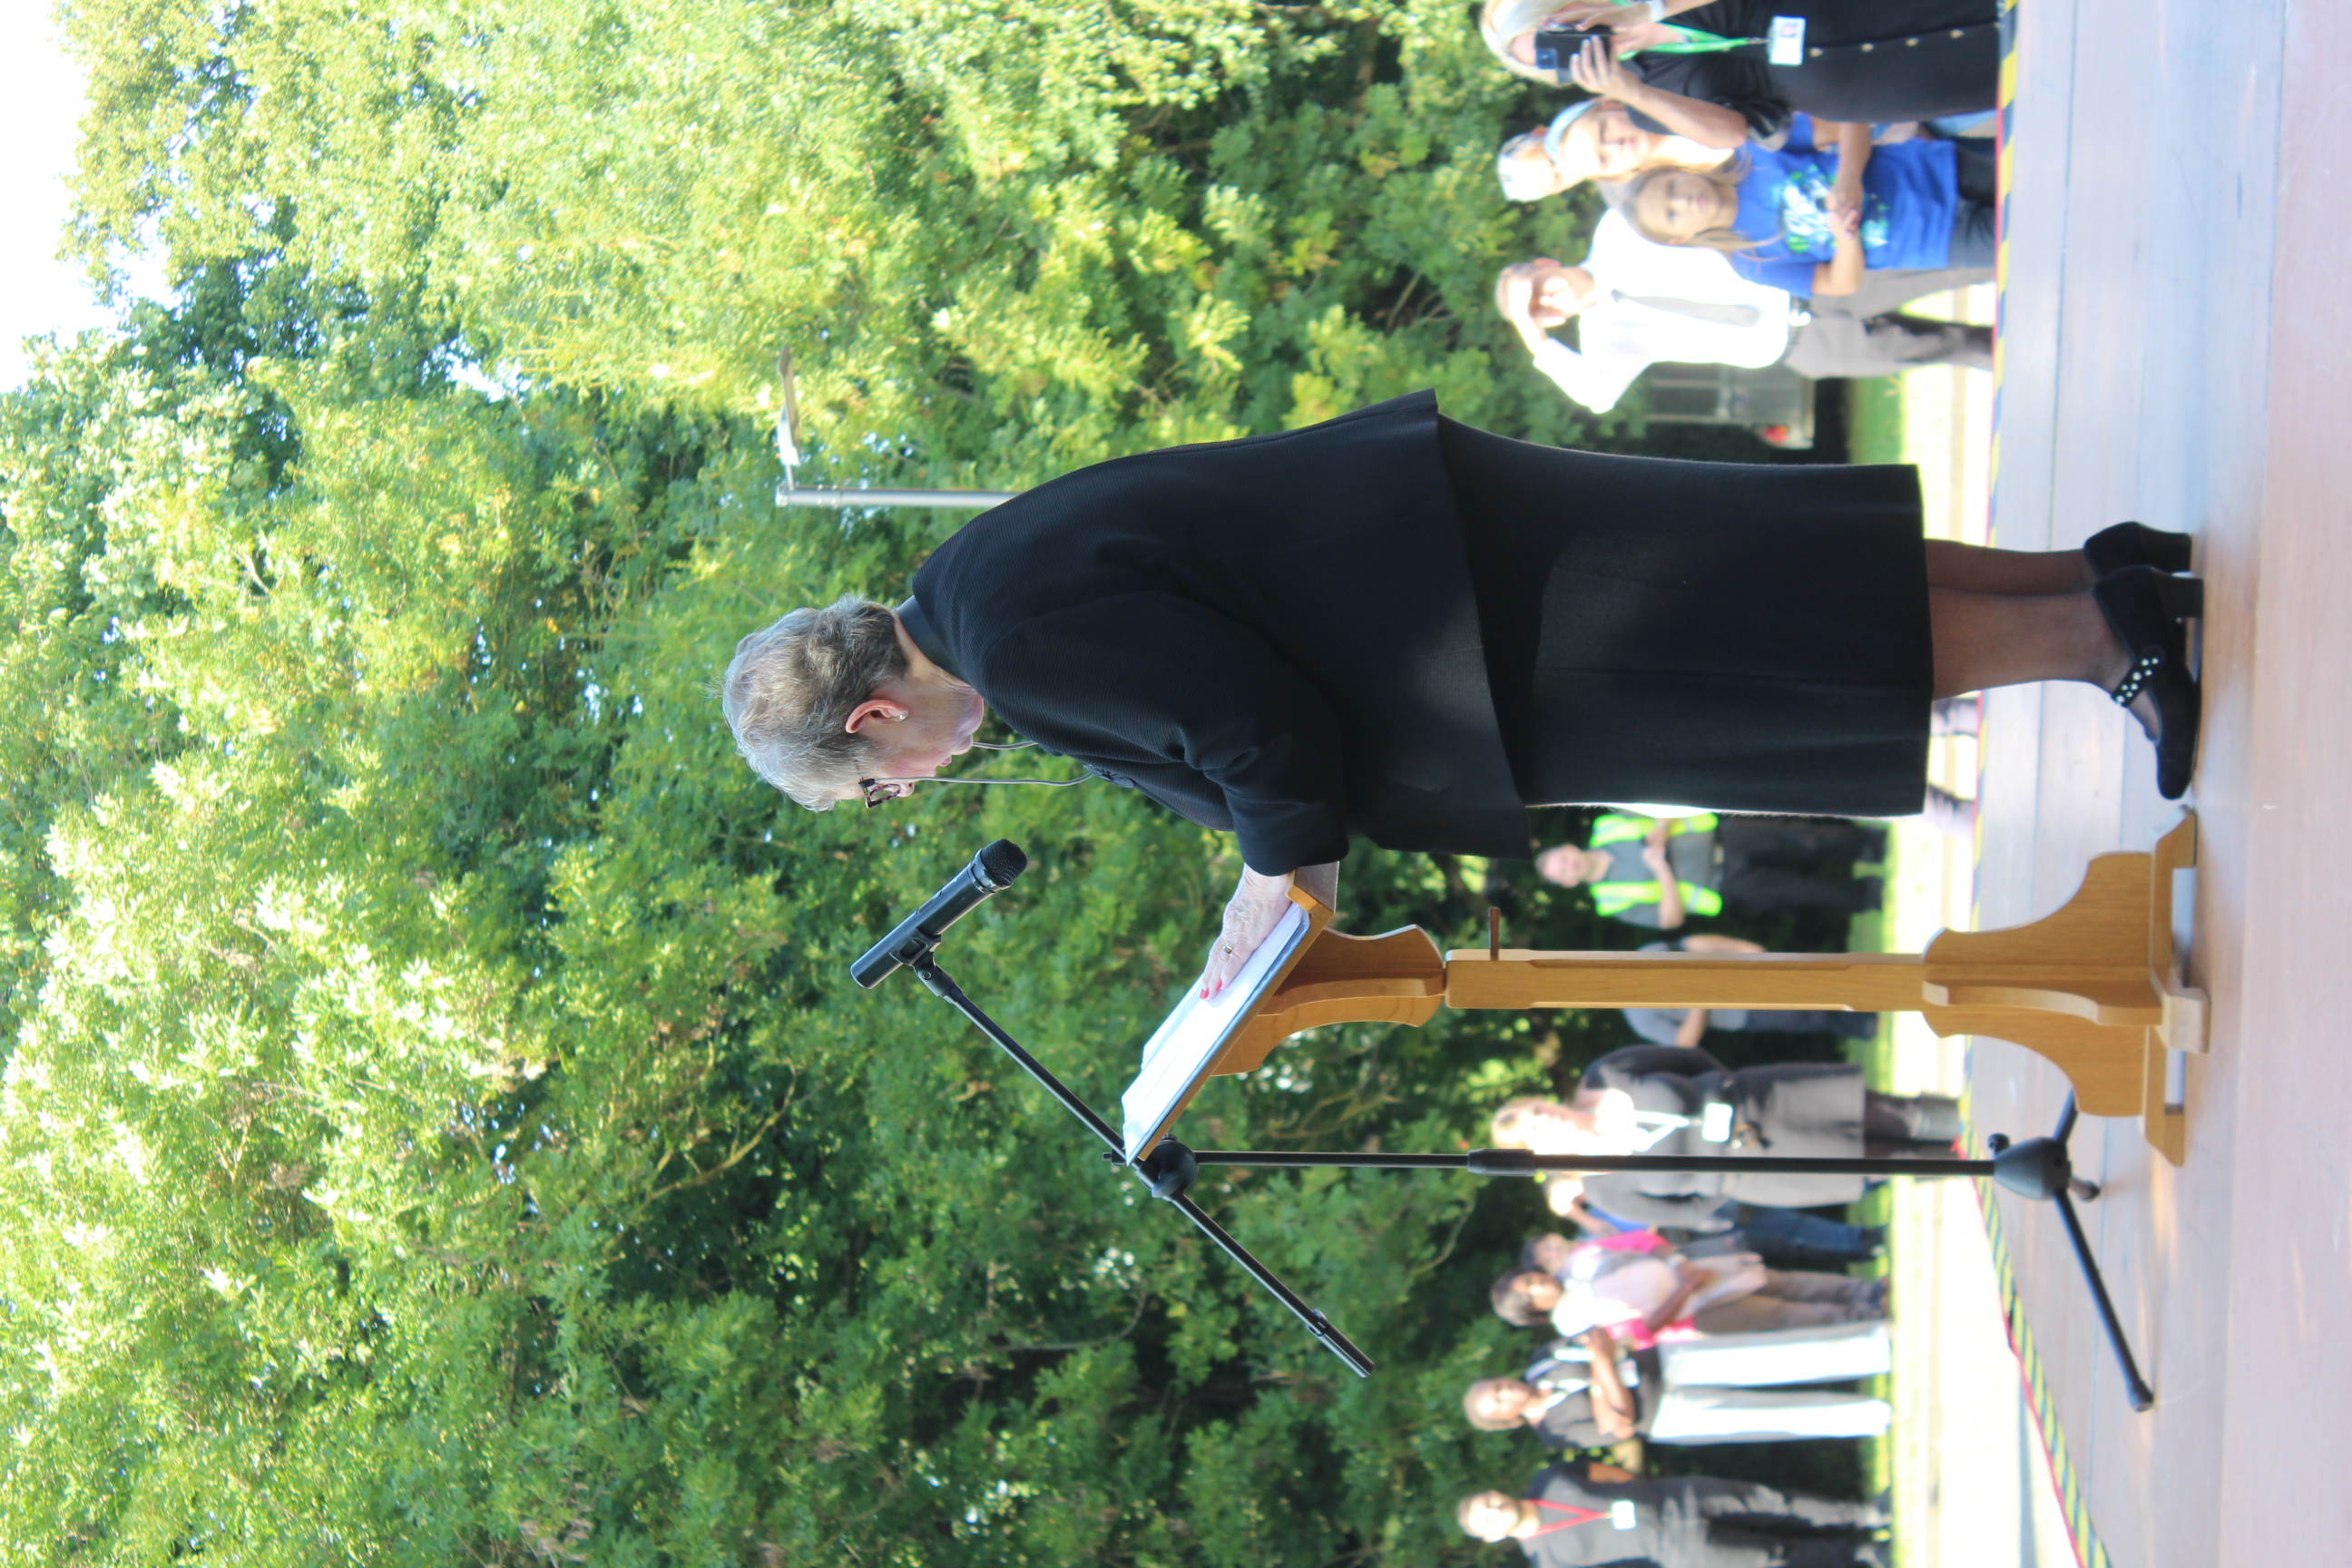 Image entitled Mayor of Ashford Cllr Mrs Jenny Webb leading a Proclamation service at Ashford’s Civic Centre on 11 September, 2022